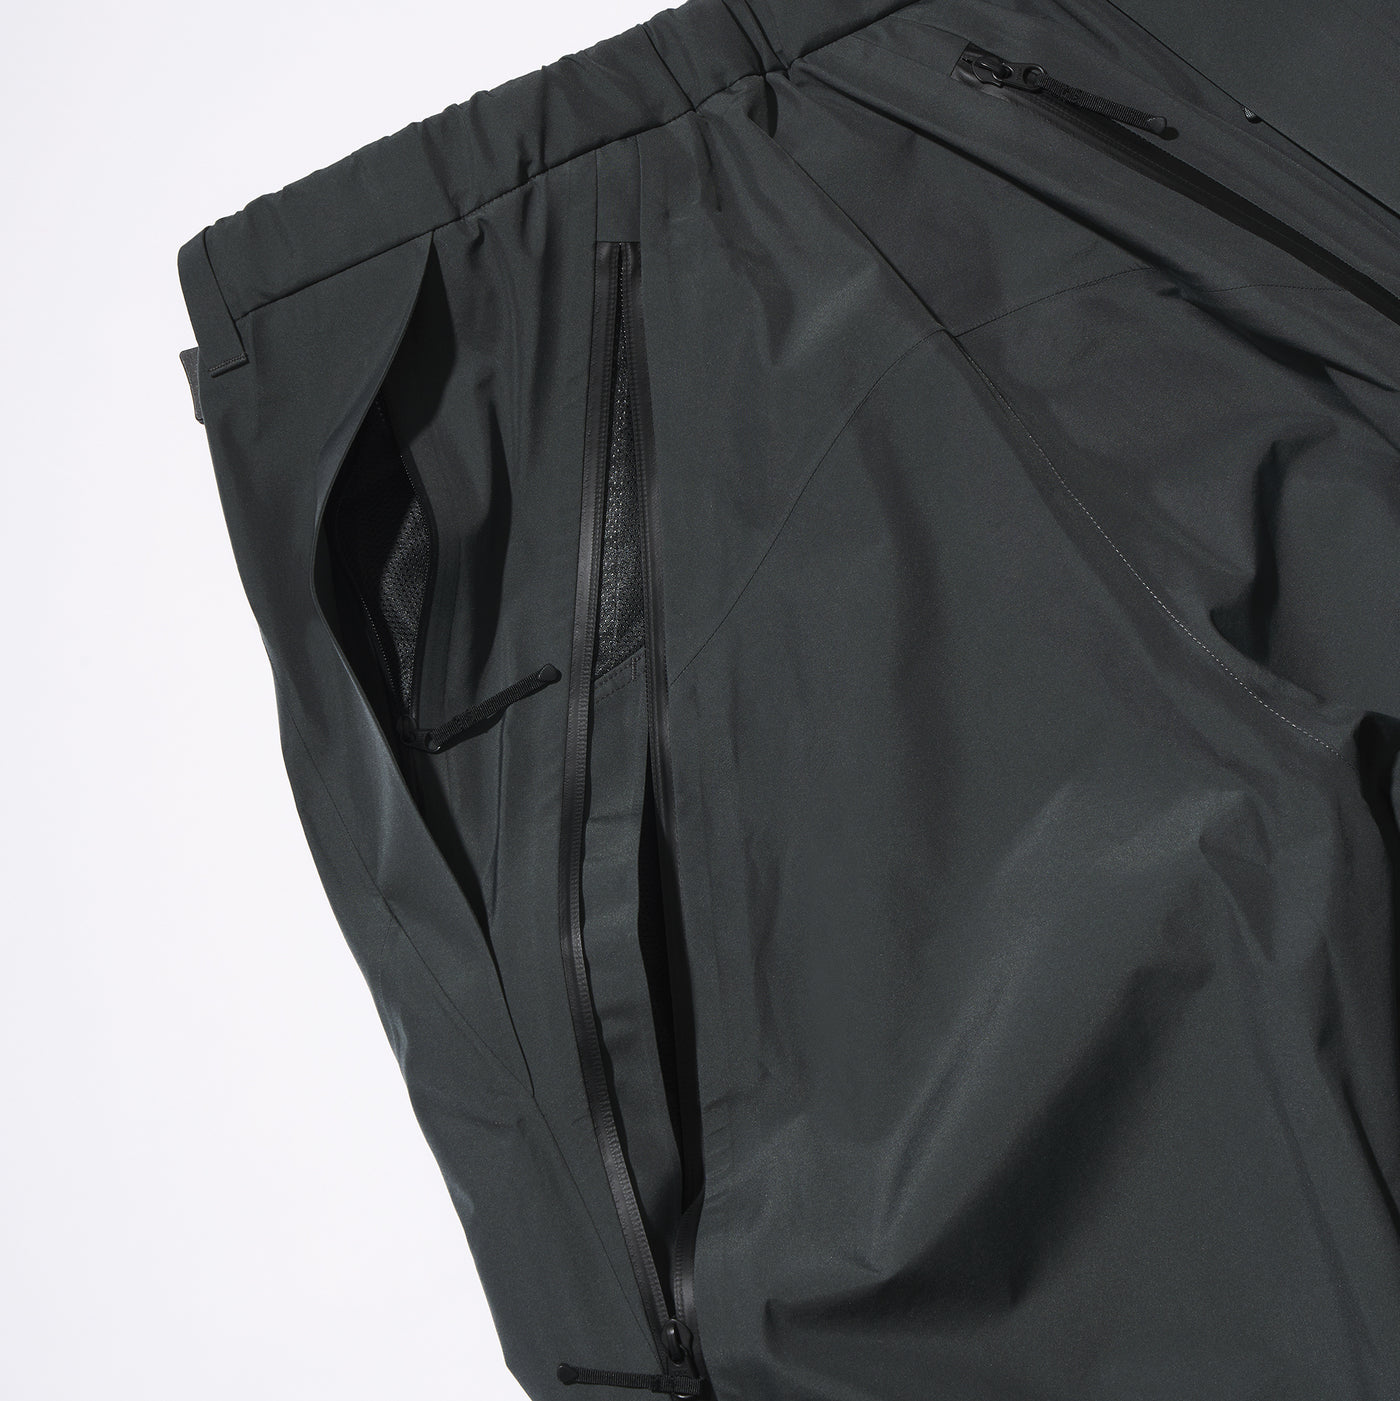 Women's GORE-TEX 3L Shell Trousers